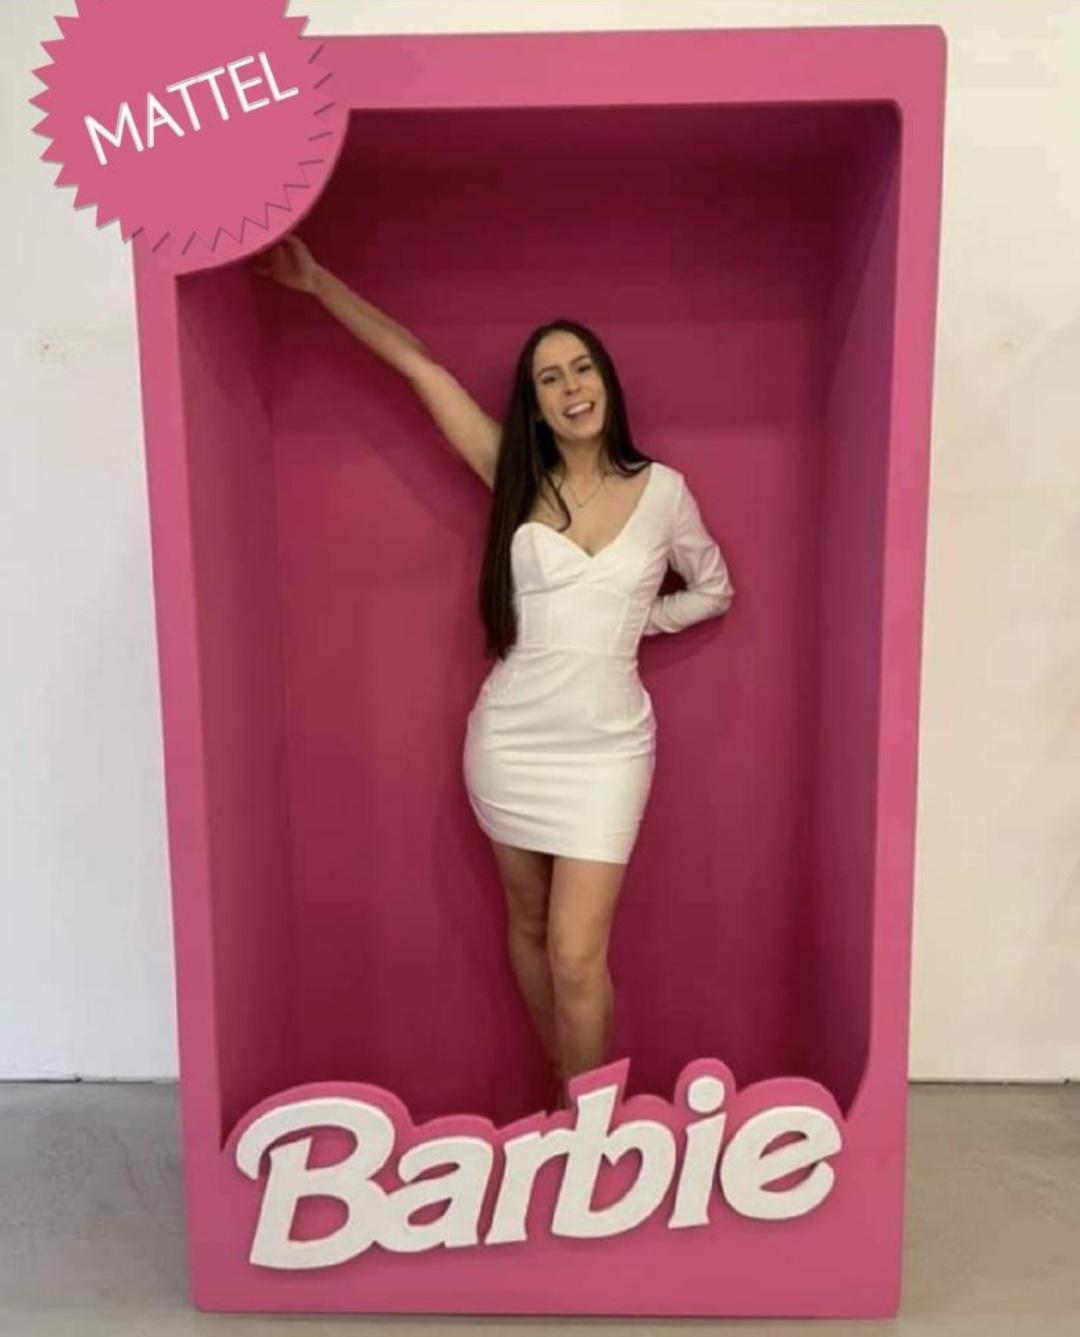 Barbie Box Dimensions